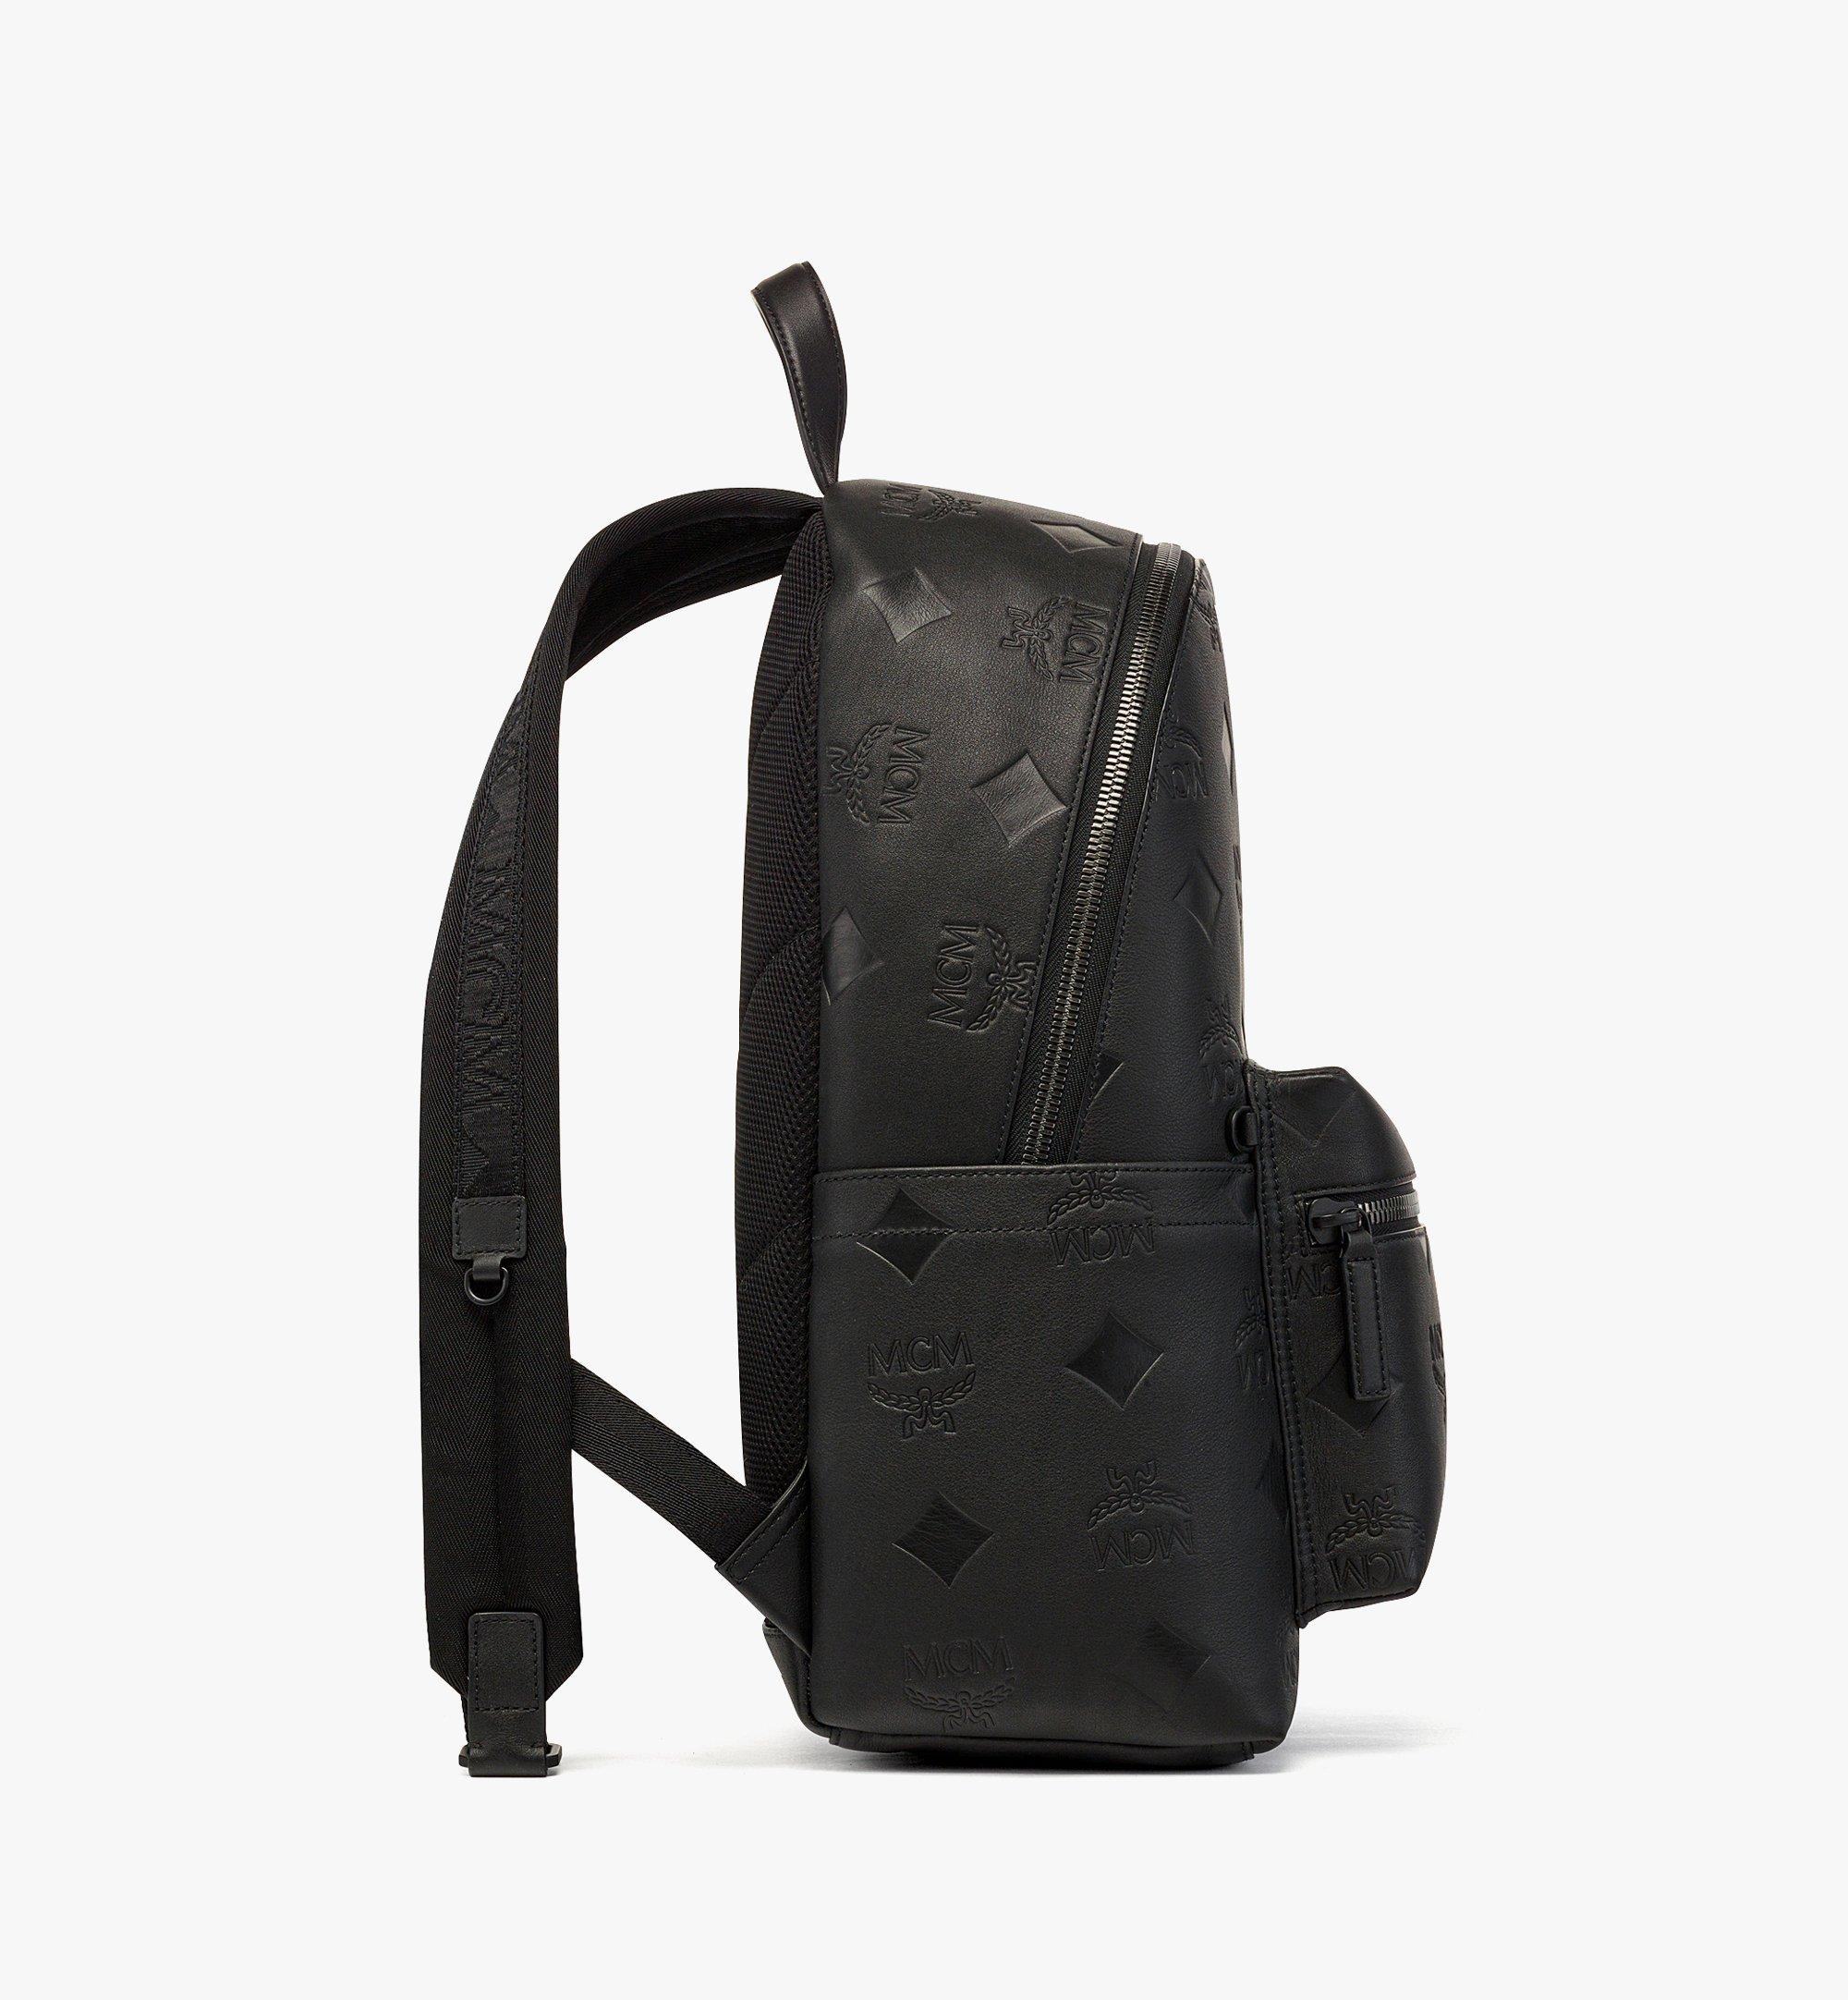 Medium Stark Backpack in Maxi Monogram Leather Black | MCM ®US